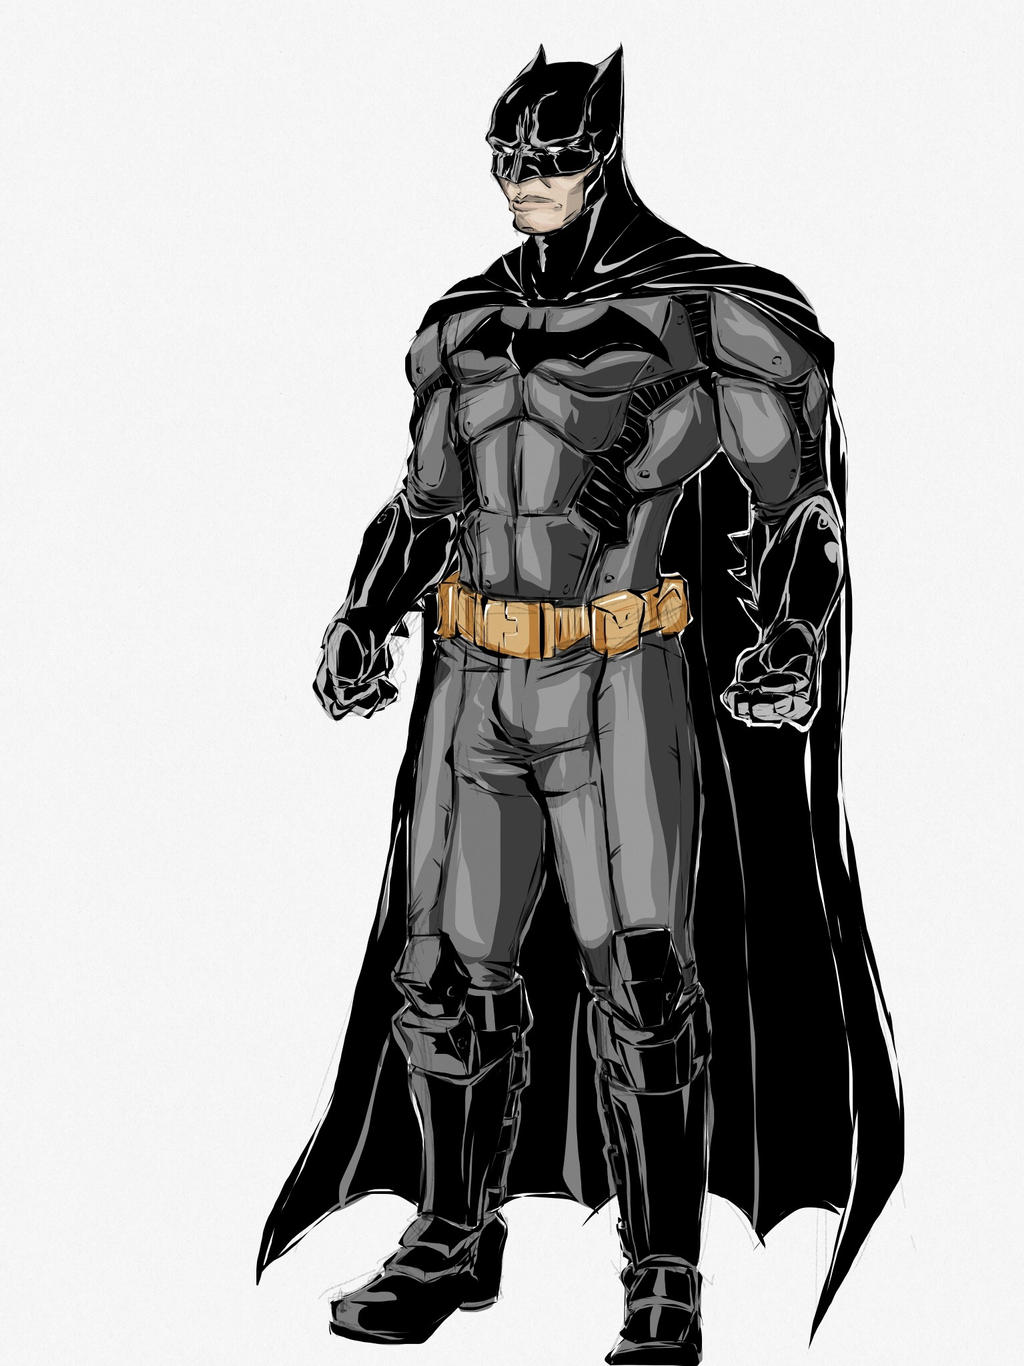 Batman costume design by ochosa1 on DeviantArt